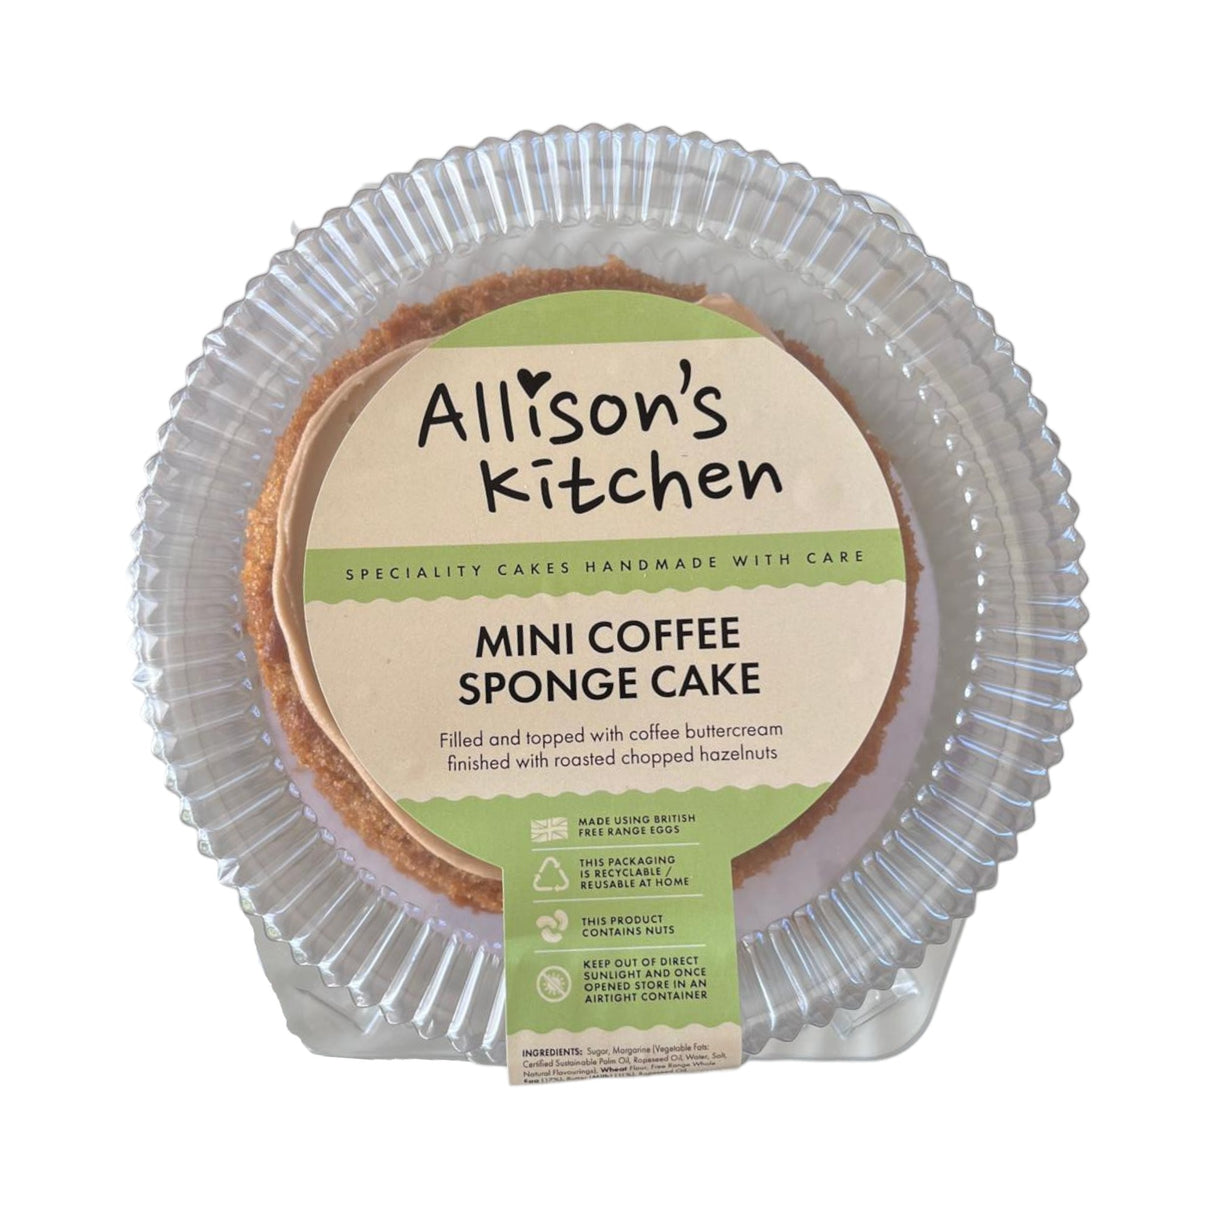 Allison's Kitchen Mini Coffee Sponge Cake